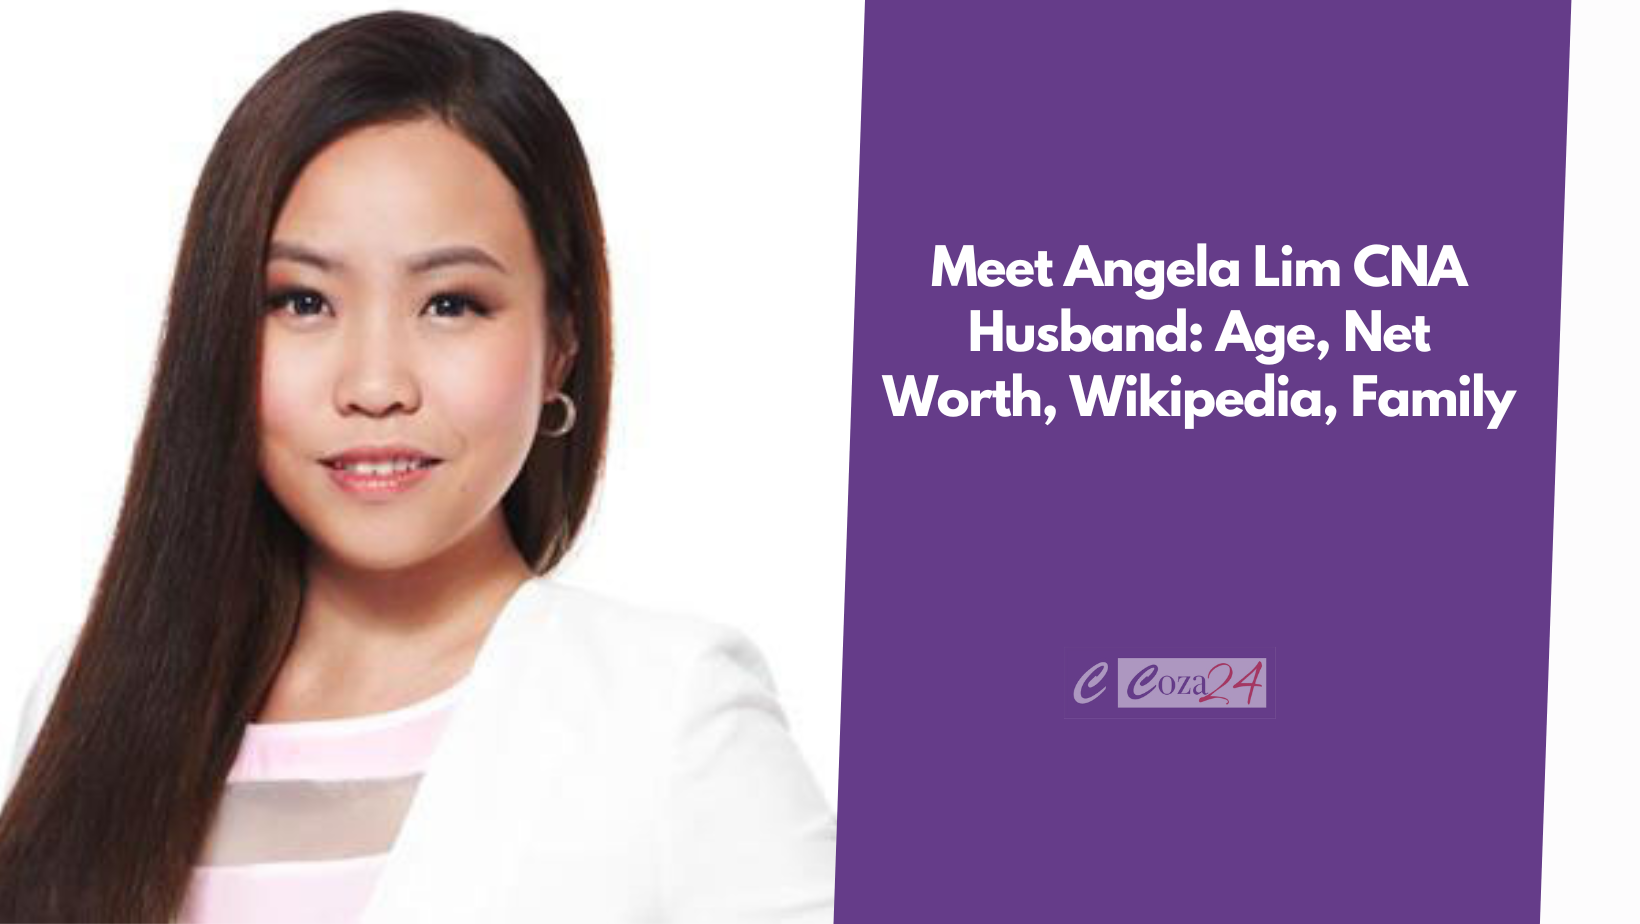 Meet Angela Lim CNA Husband: Age, Net Worth, Wikipedia, Family